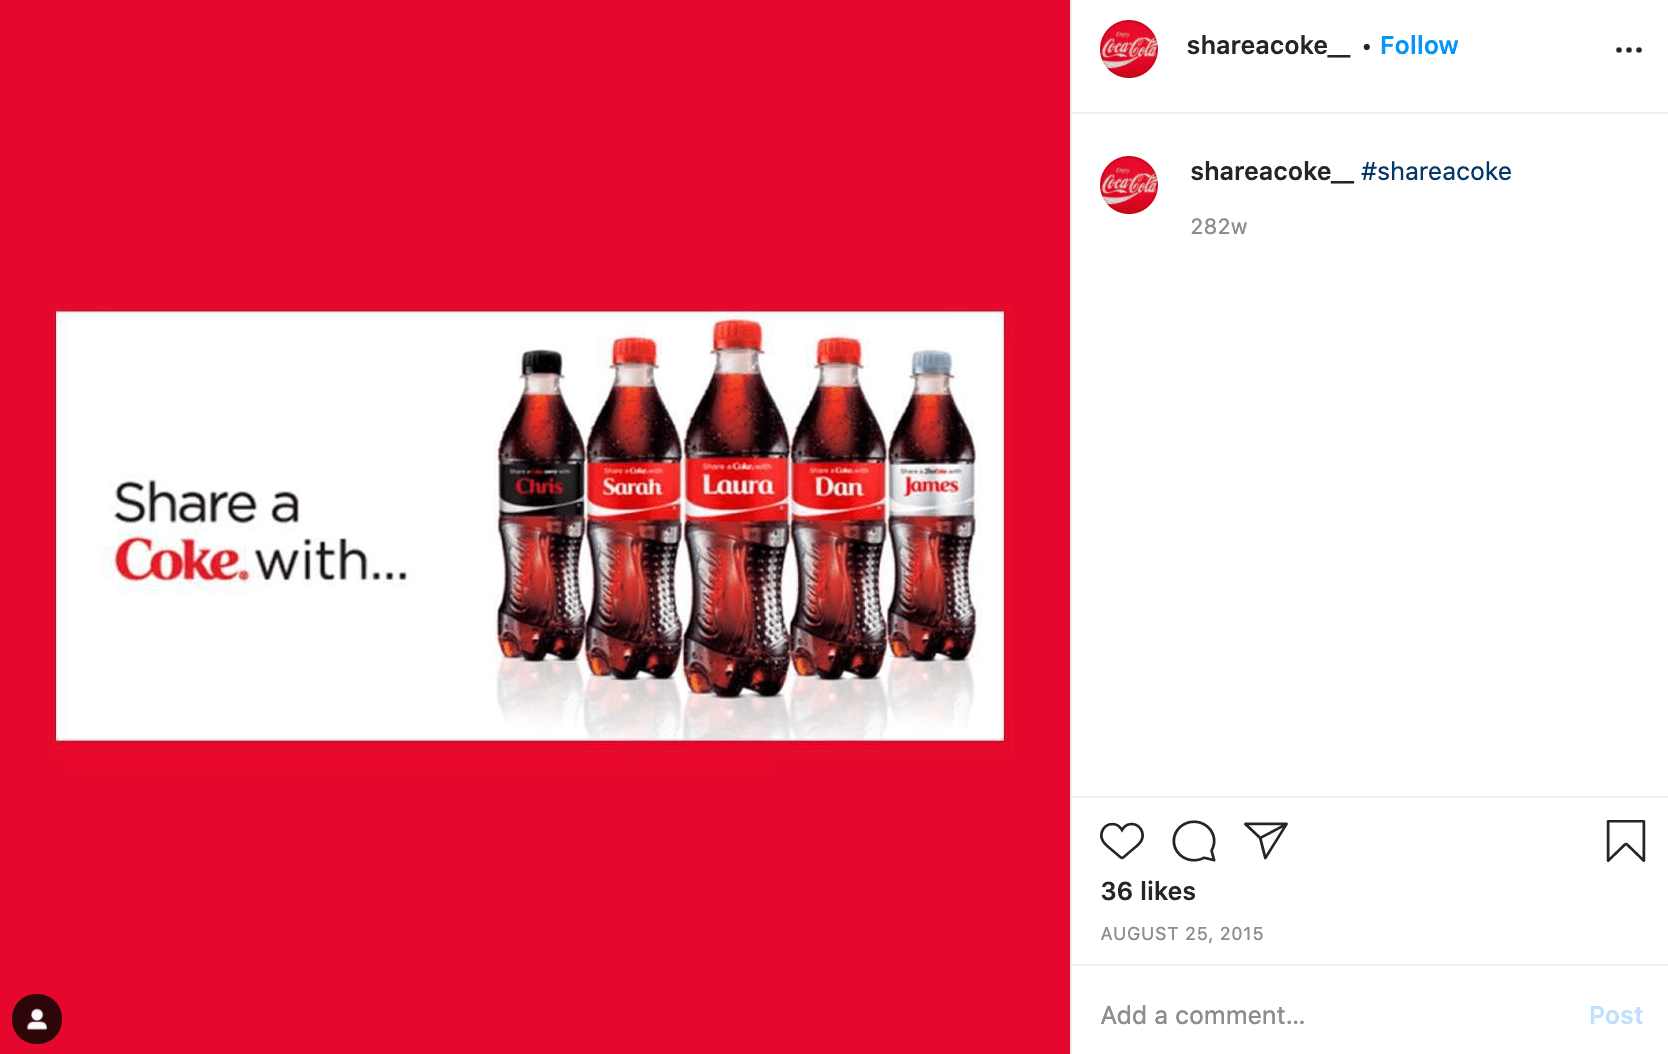 micromarketing example with coca cola